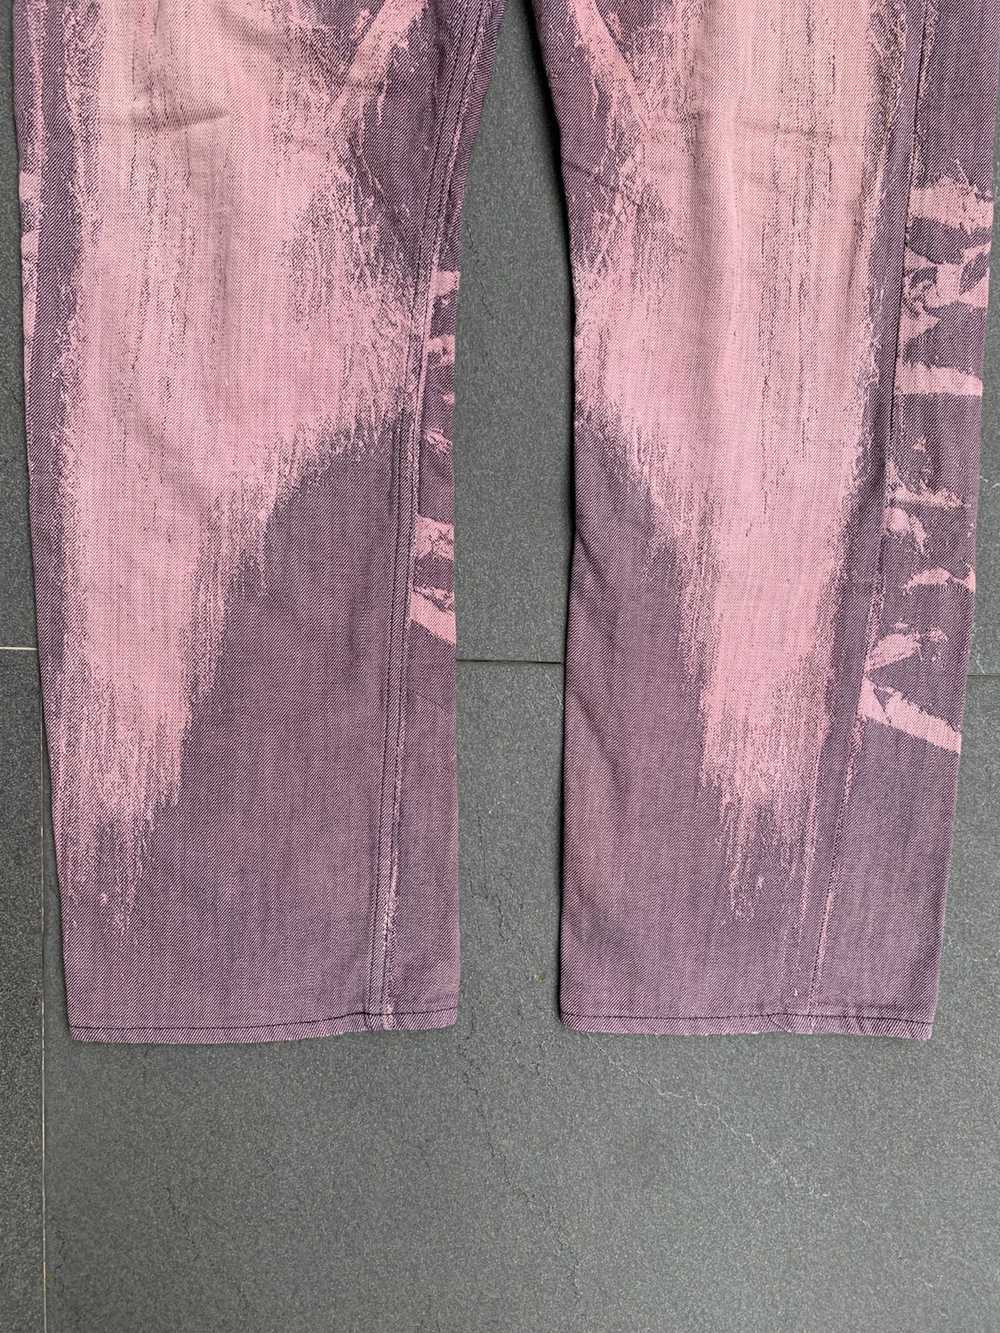 Issey Miyake APOC Galaxy Purple Denim Jeans - image 3